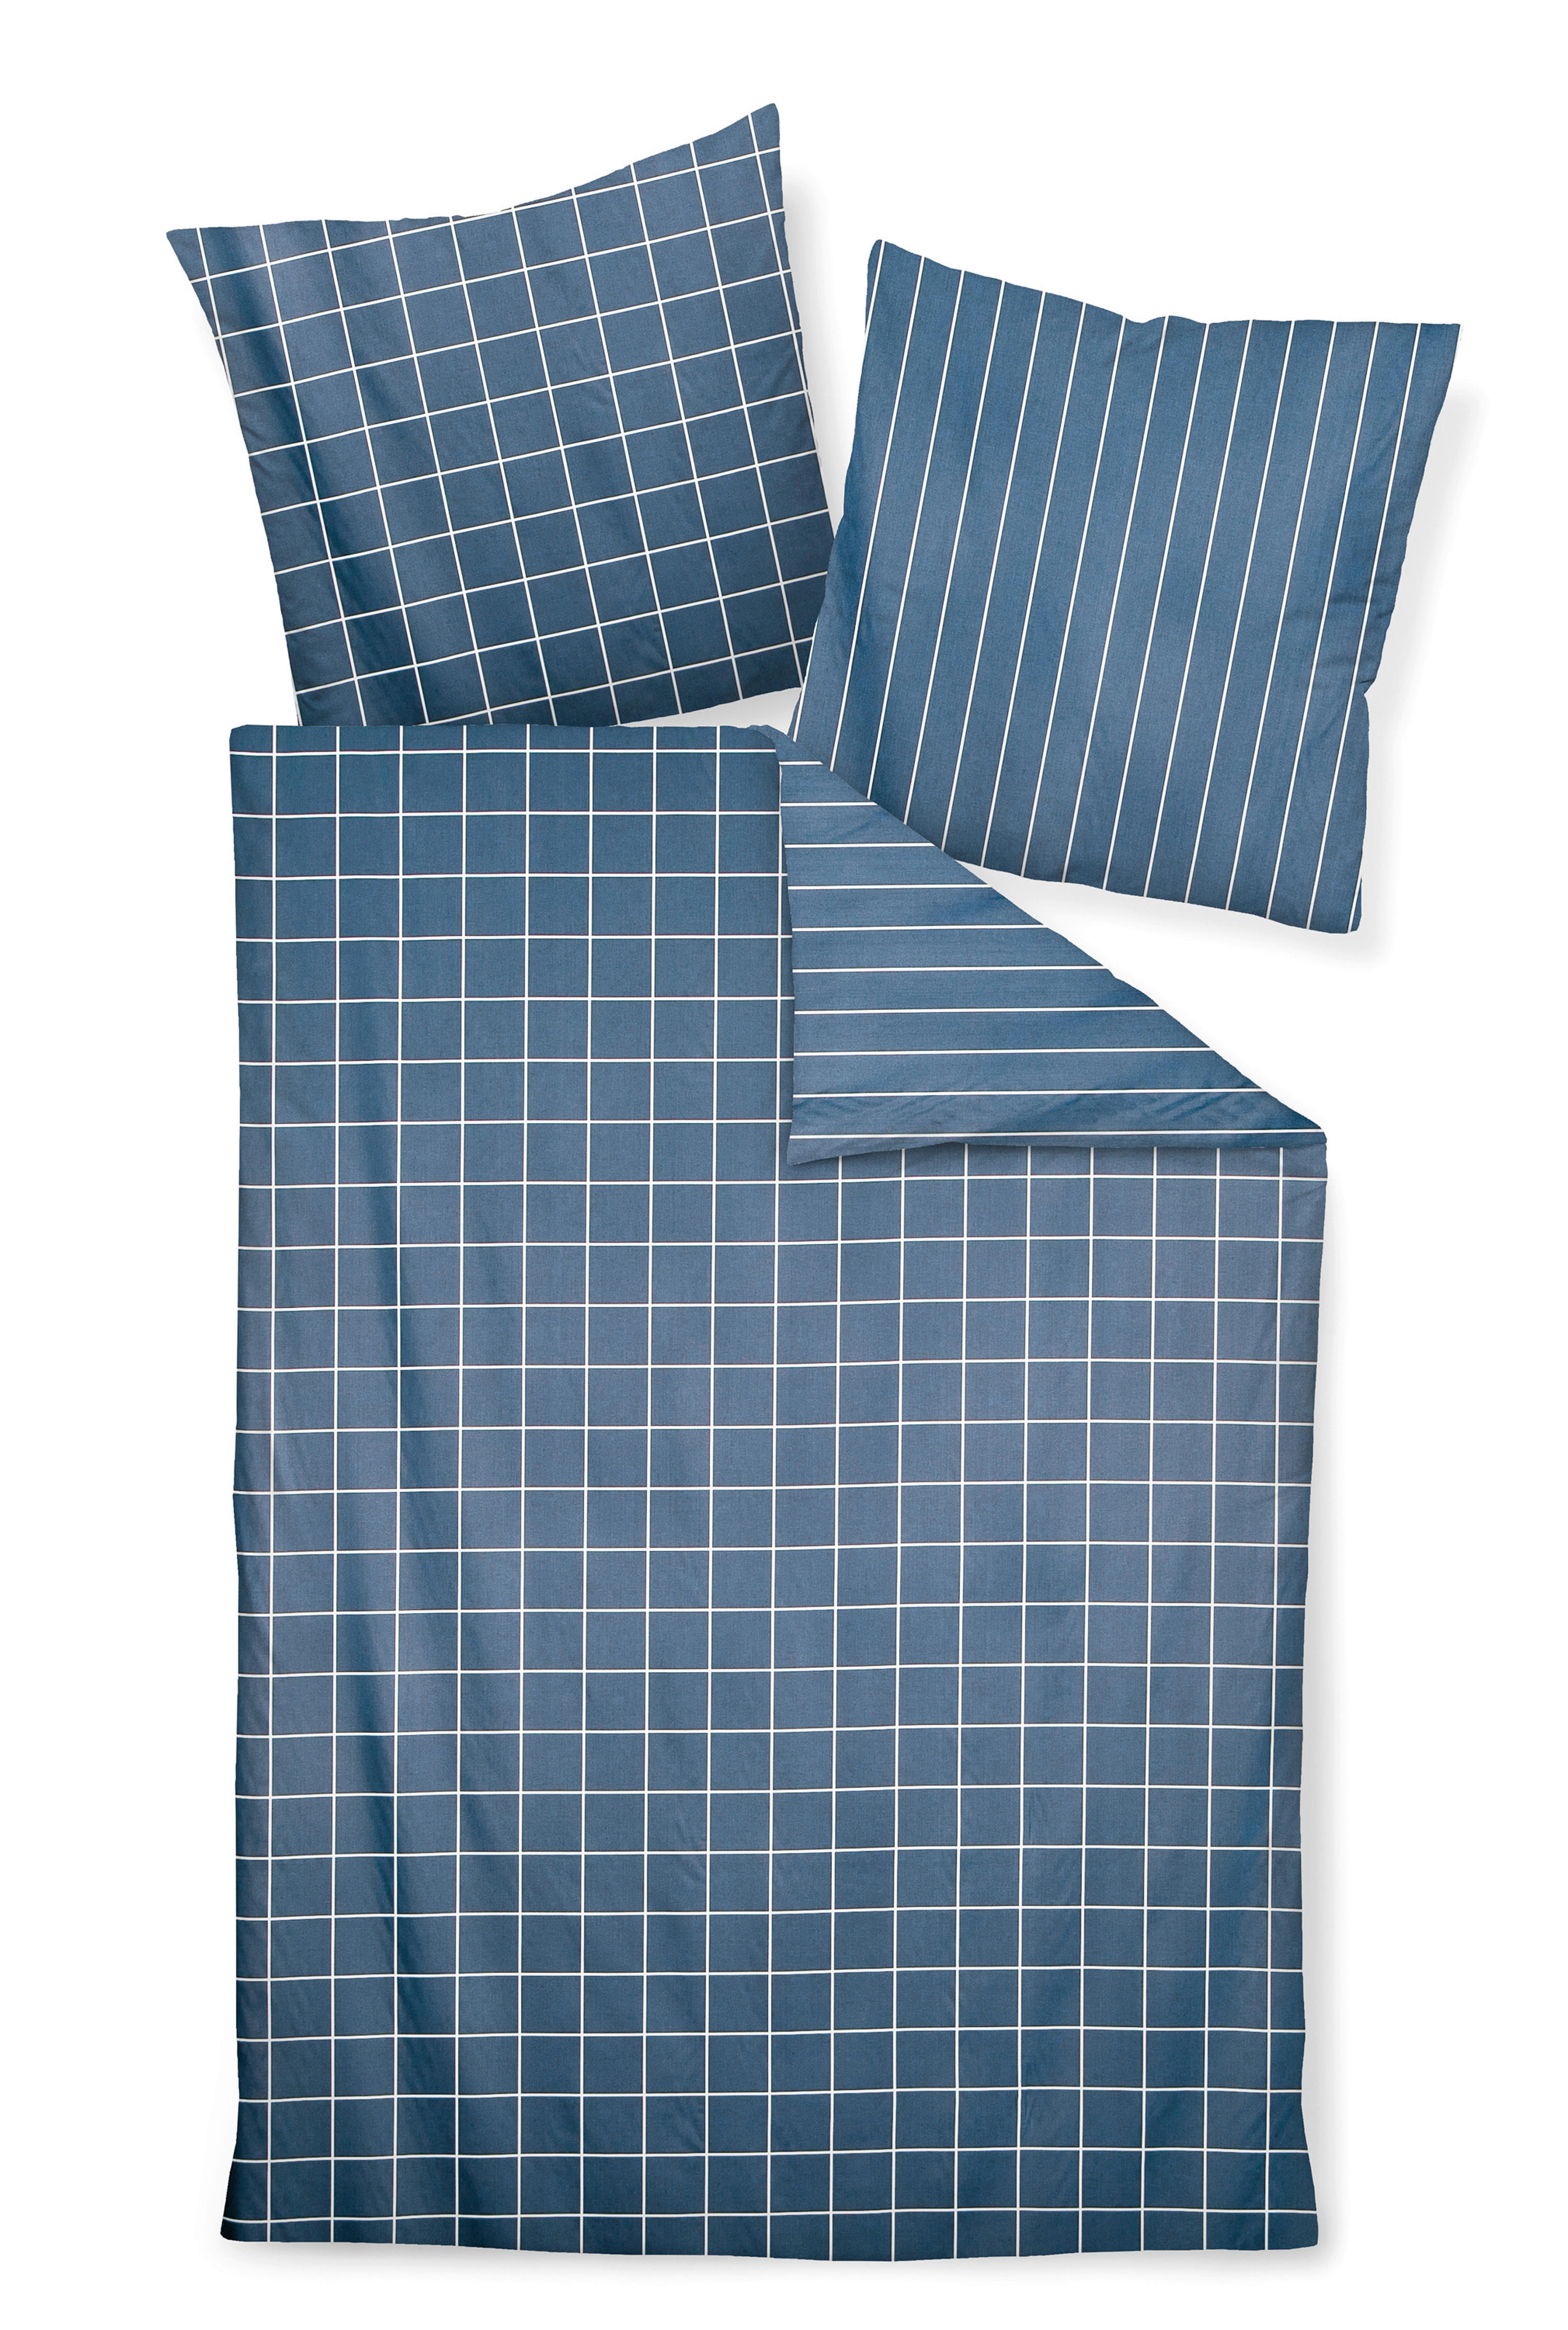 BETTWÄSCHE Makosatin  - Türkis/Blau, Basics, Textil (135/200cm) - Janine